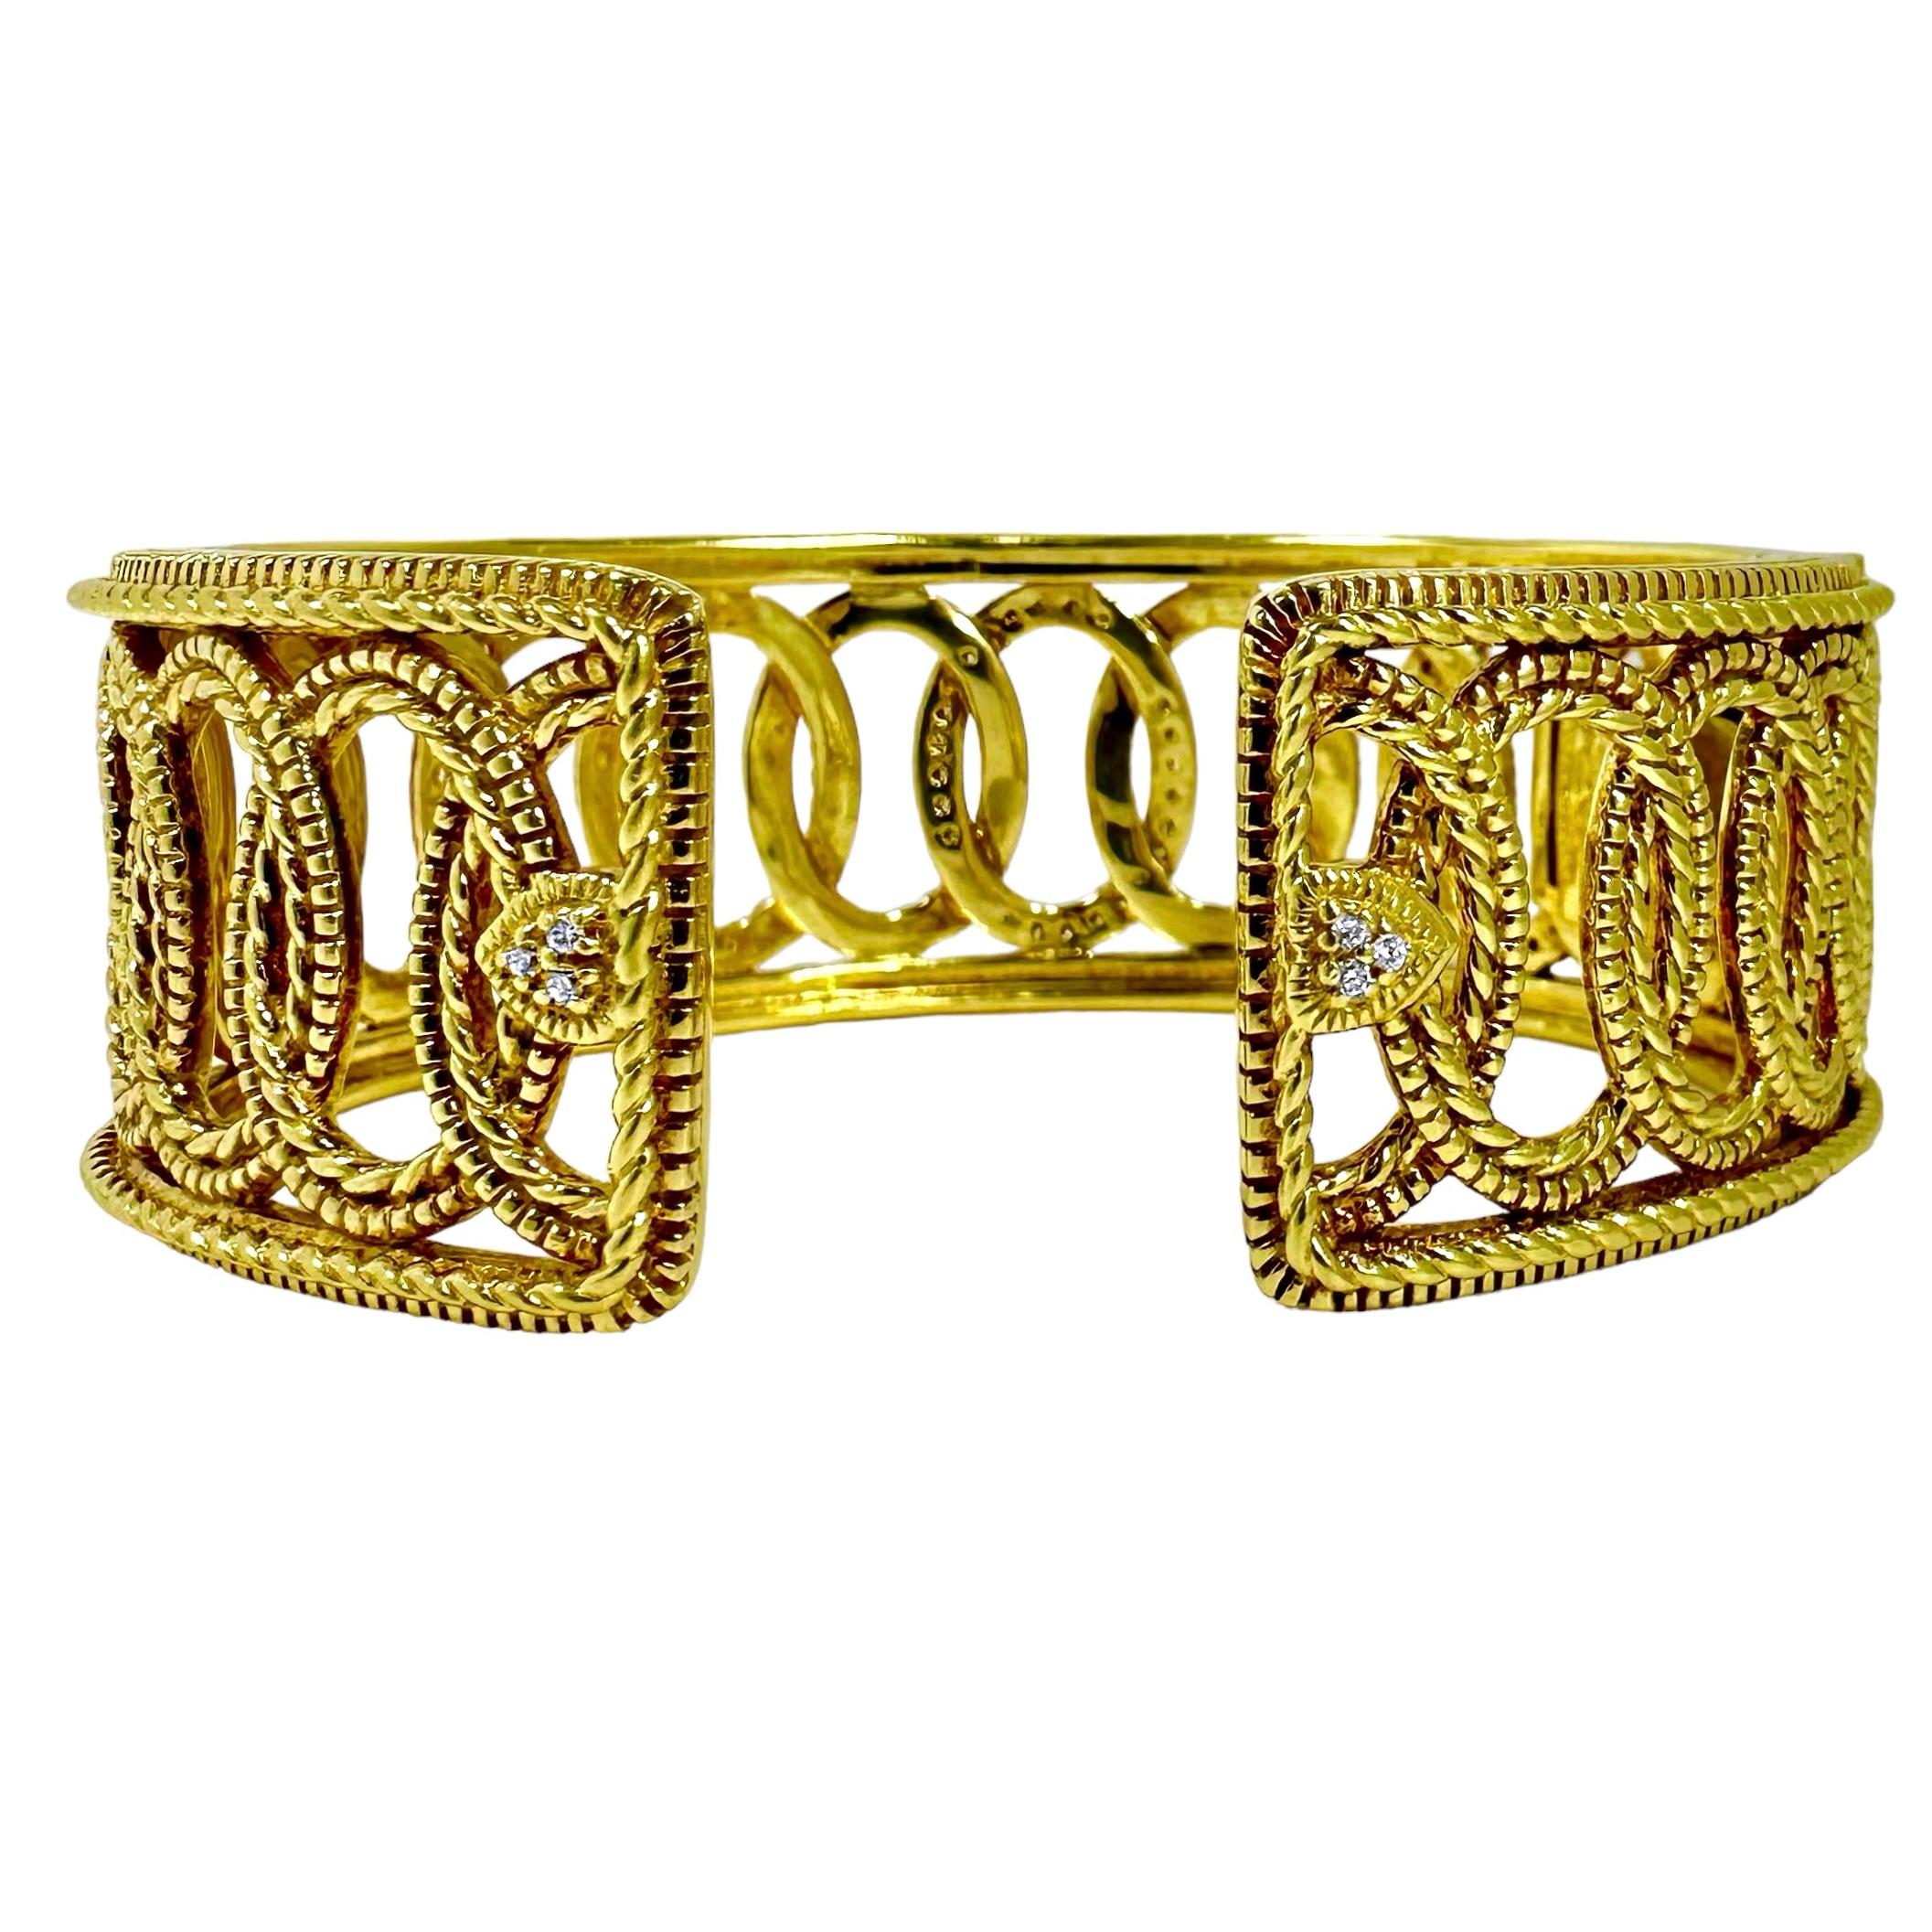 Women's Casual Judith Ripka 18k Gold Hinged, Cuff Bracelet with Diamonds 7/8 inch Wide 